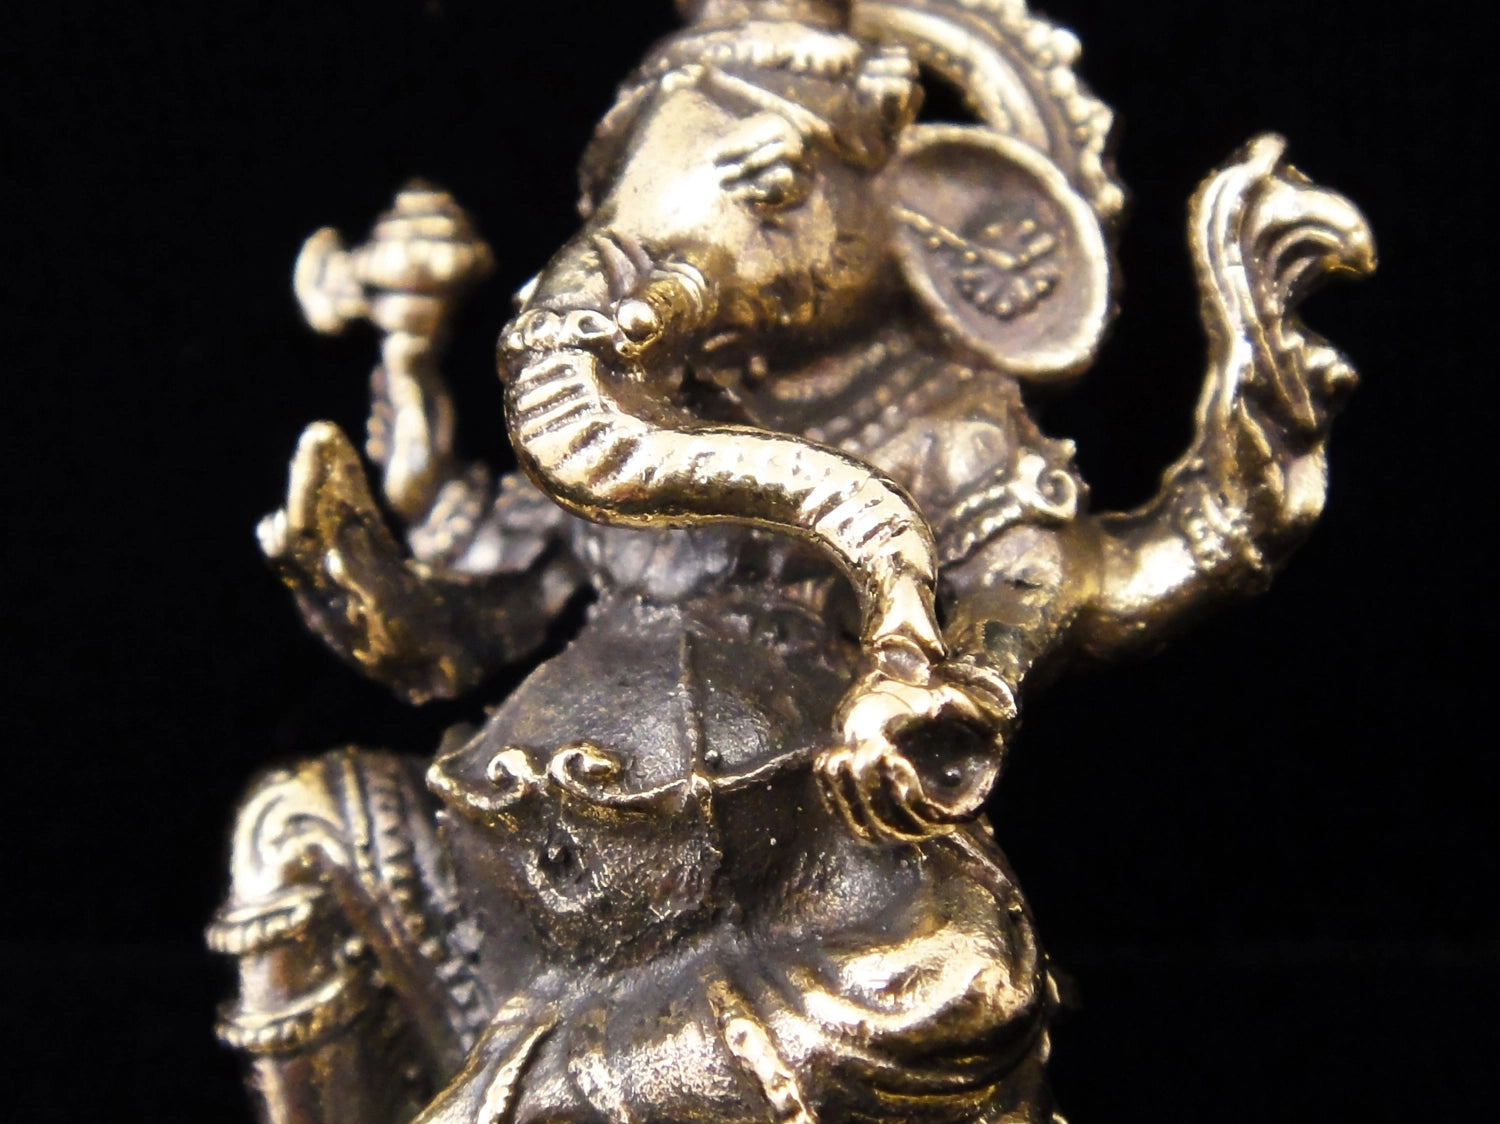 Brass Deity Statuette -Small- Ganesh - Moon Room Shop and Wellness